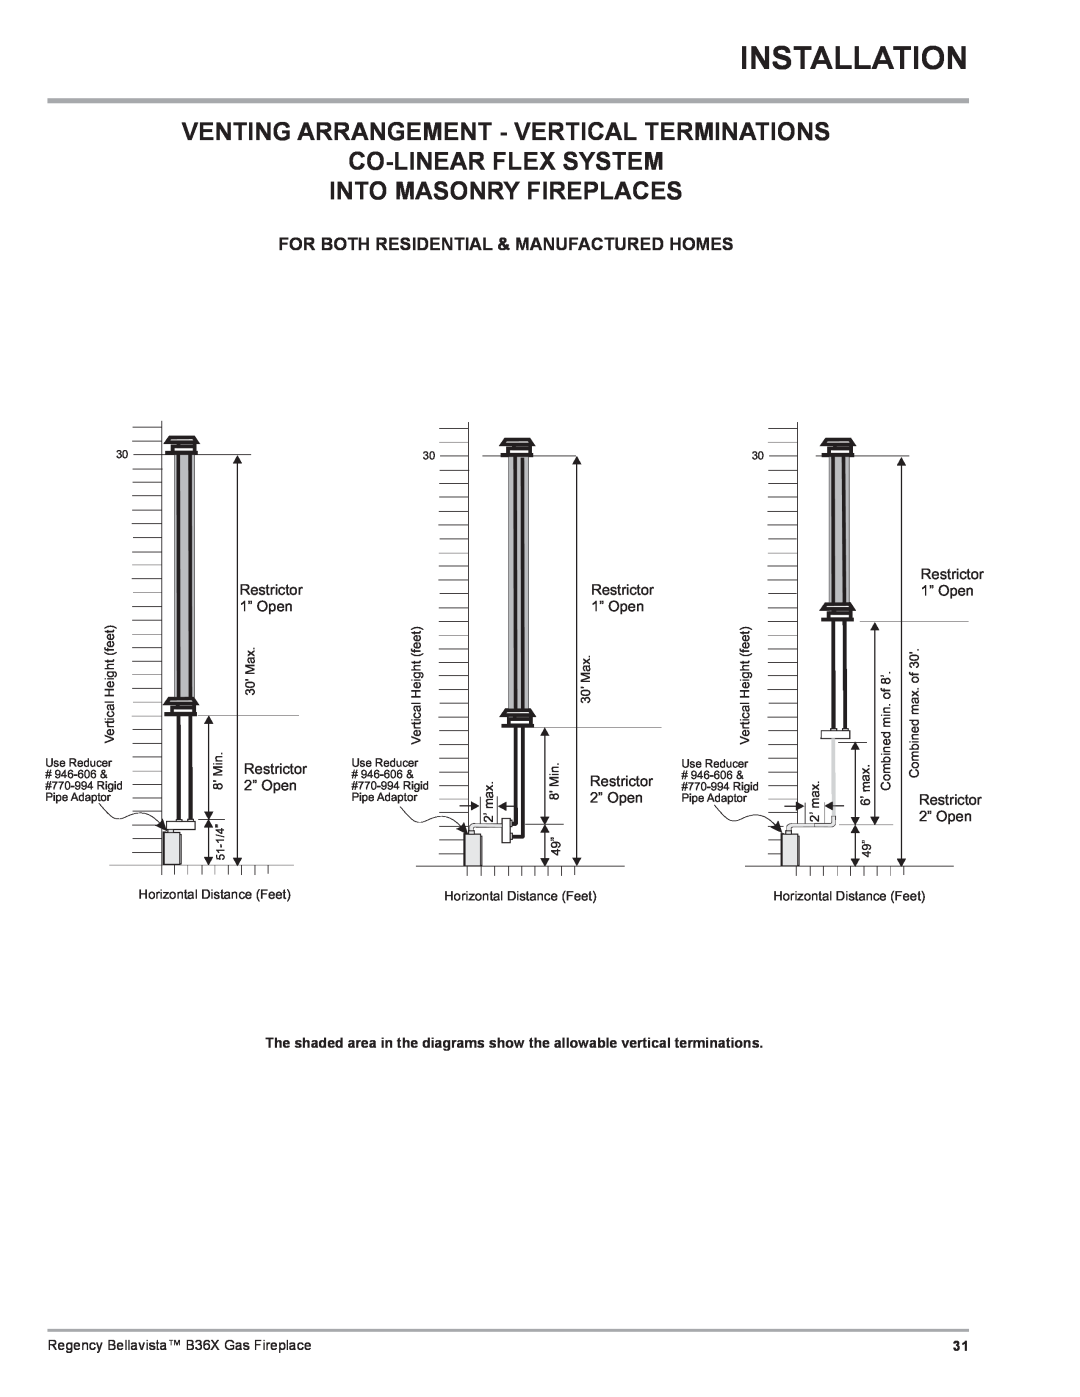 Regency B36X Installation, Venting Arrangement - Vertical Terminations, Co-Linearflex System Into Masonry Fireplaces 